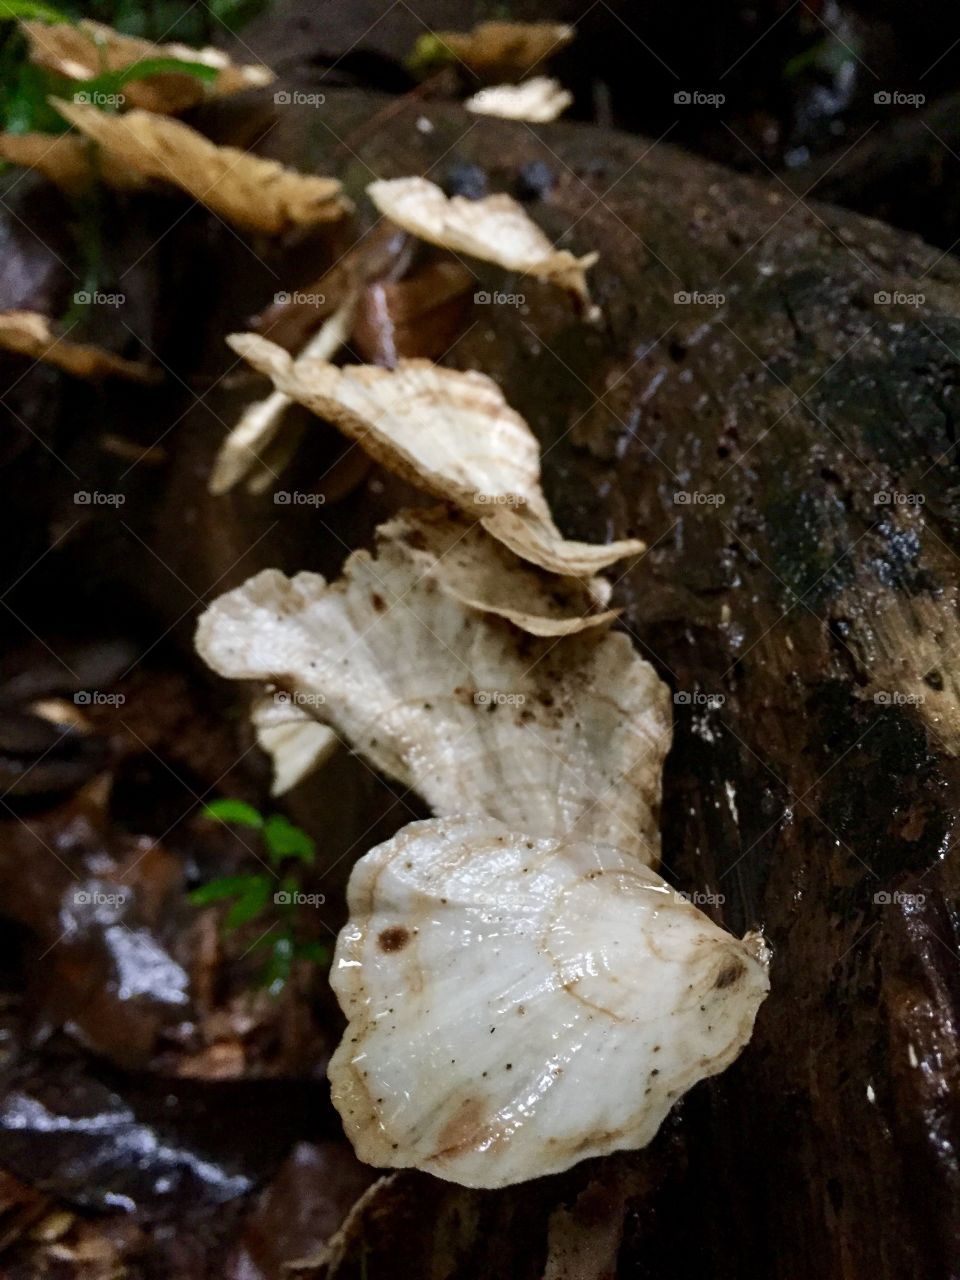 Detailed wild mushrooms
